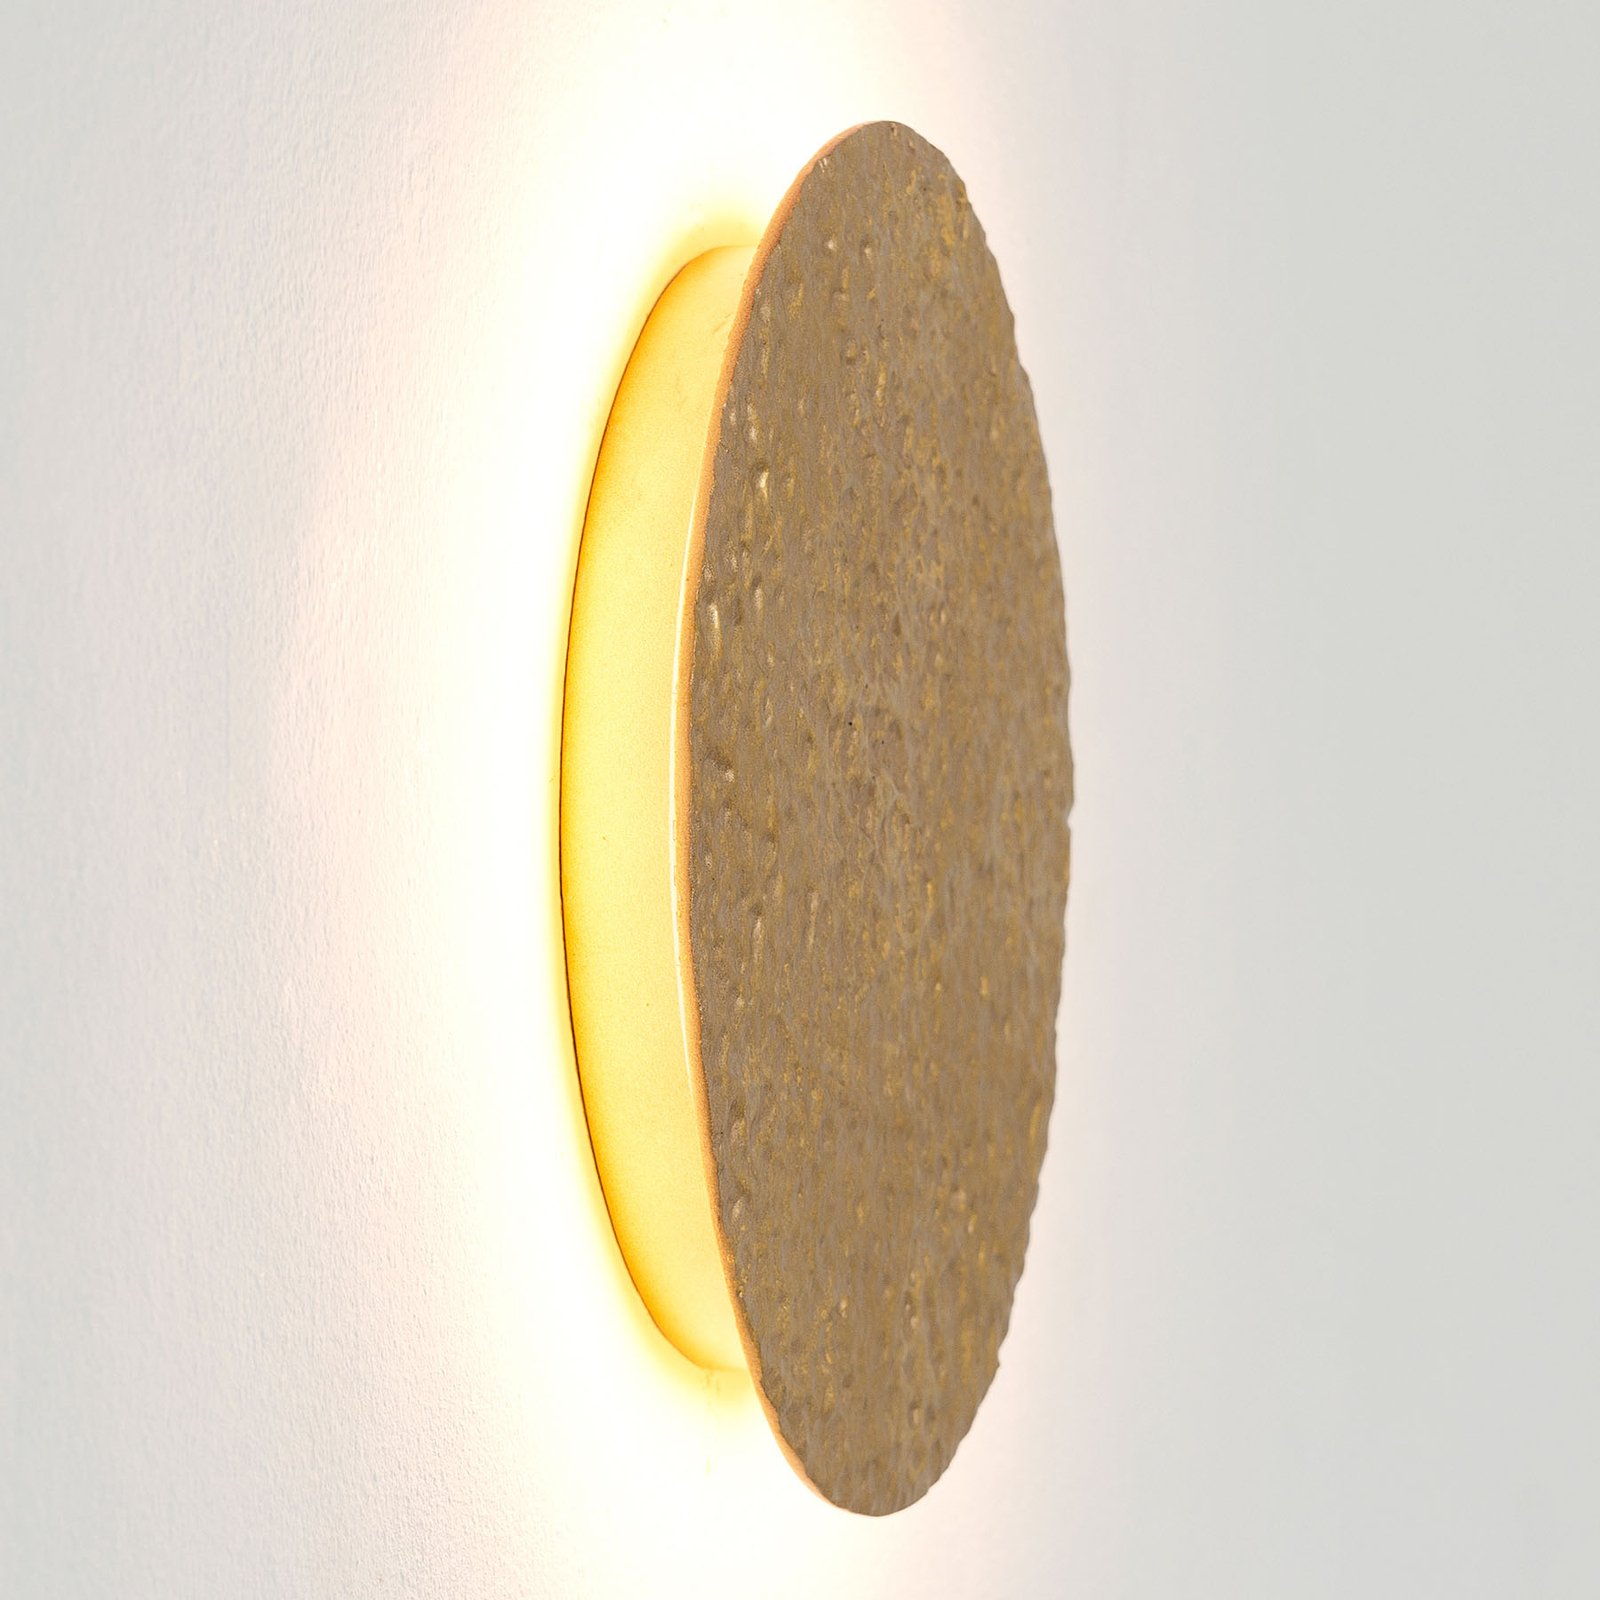 LED-Wandleuchte Meteor, Ø 19 cm, gold